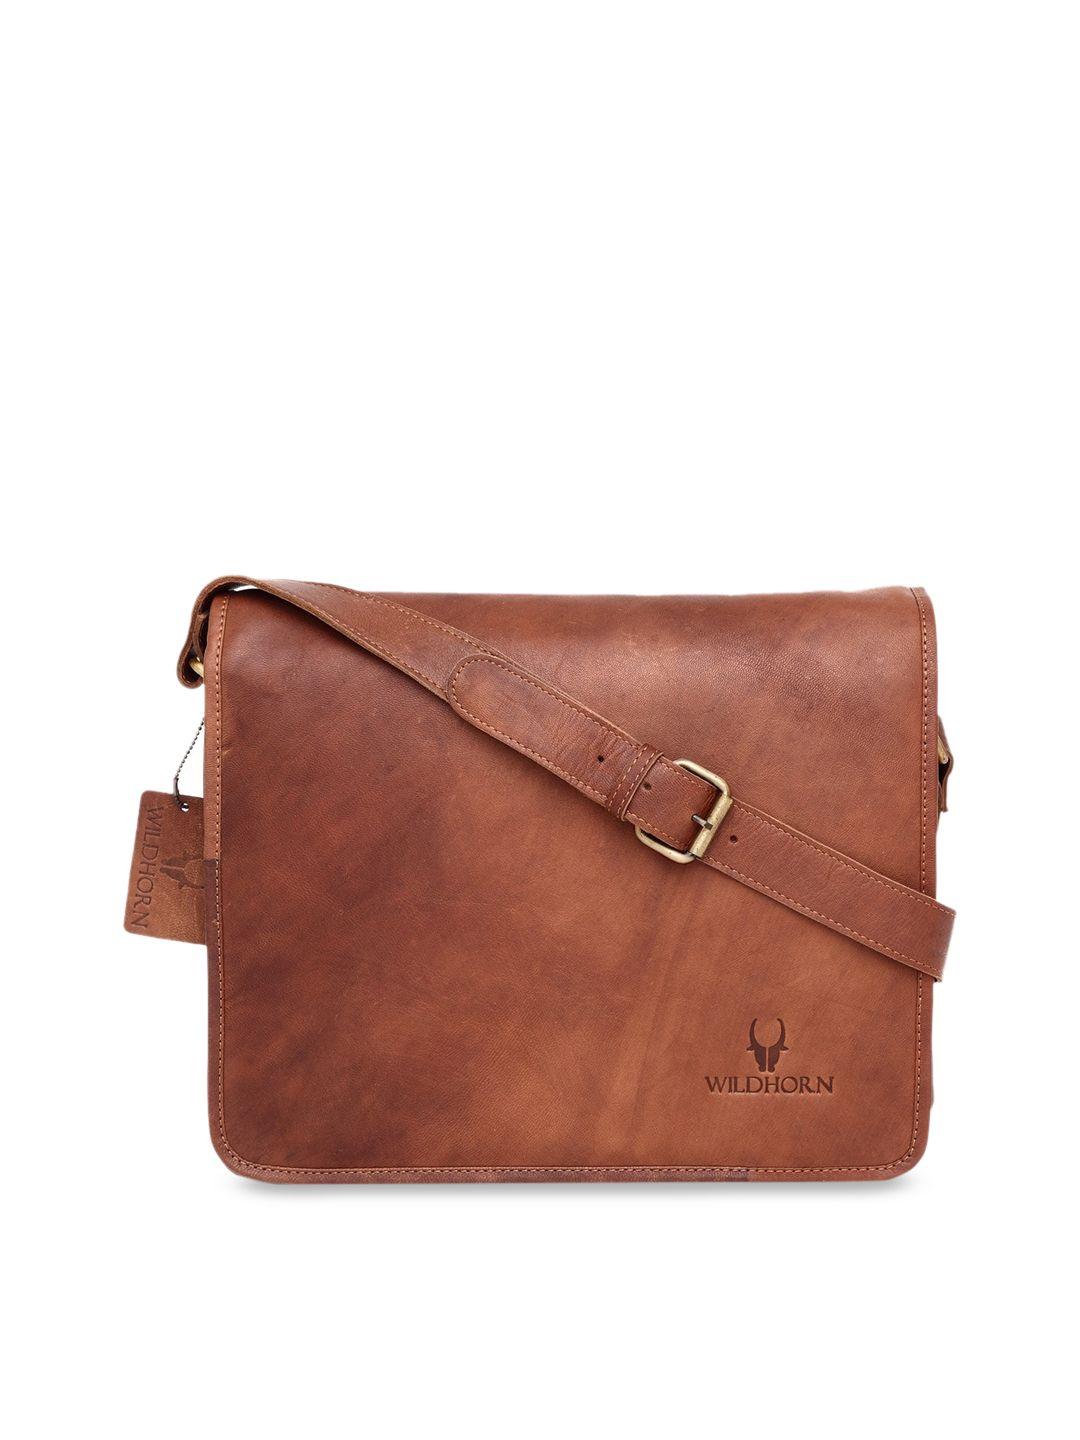 wildhorn men tan brown textured genuine leather messenger bag